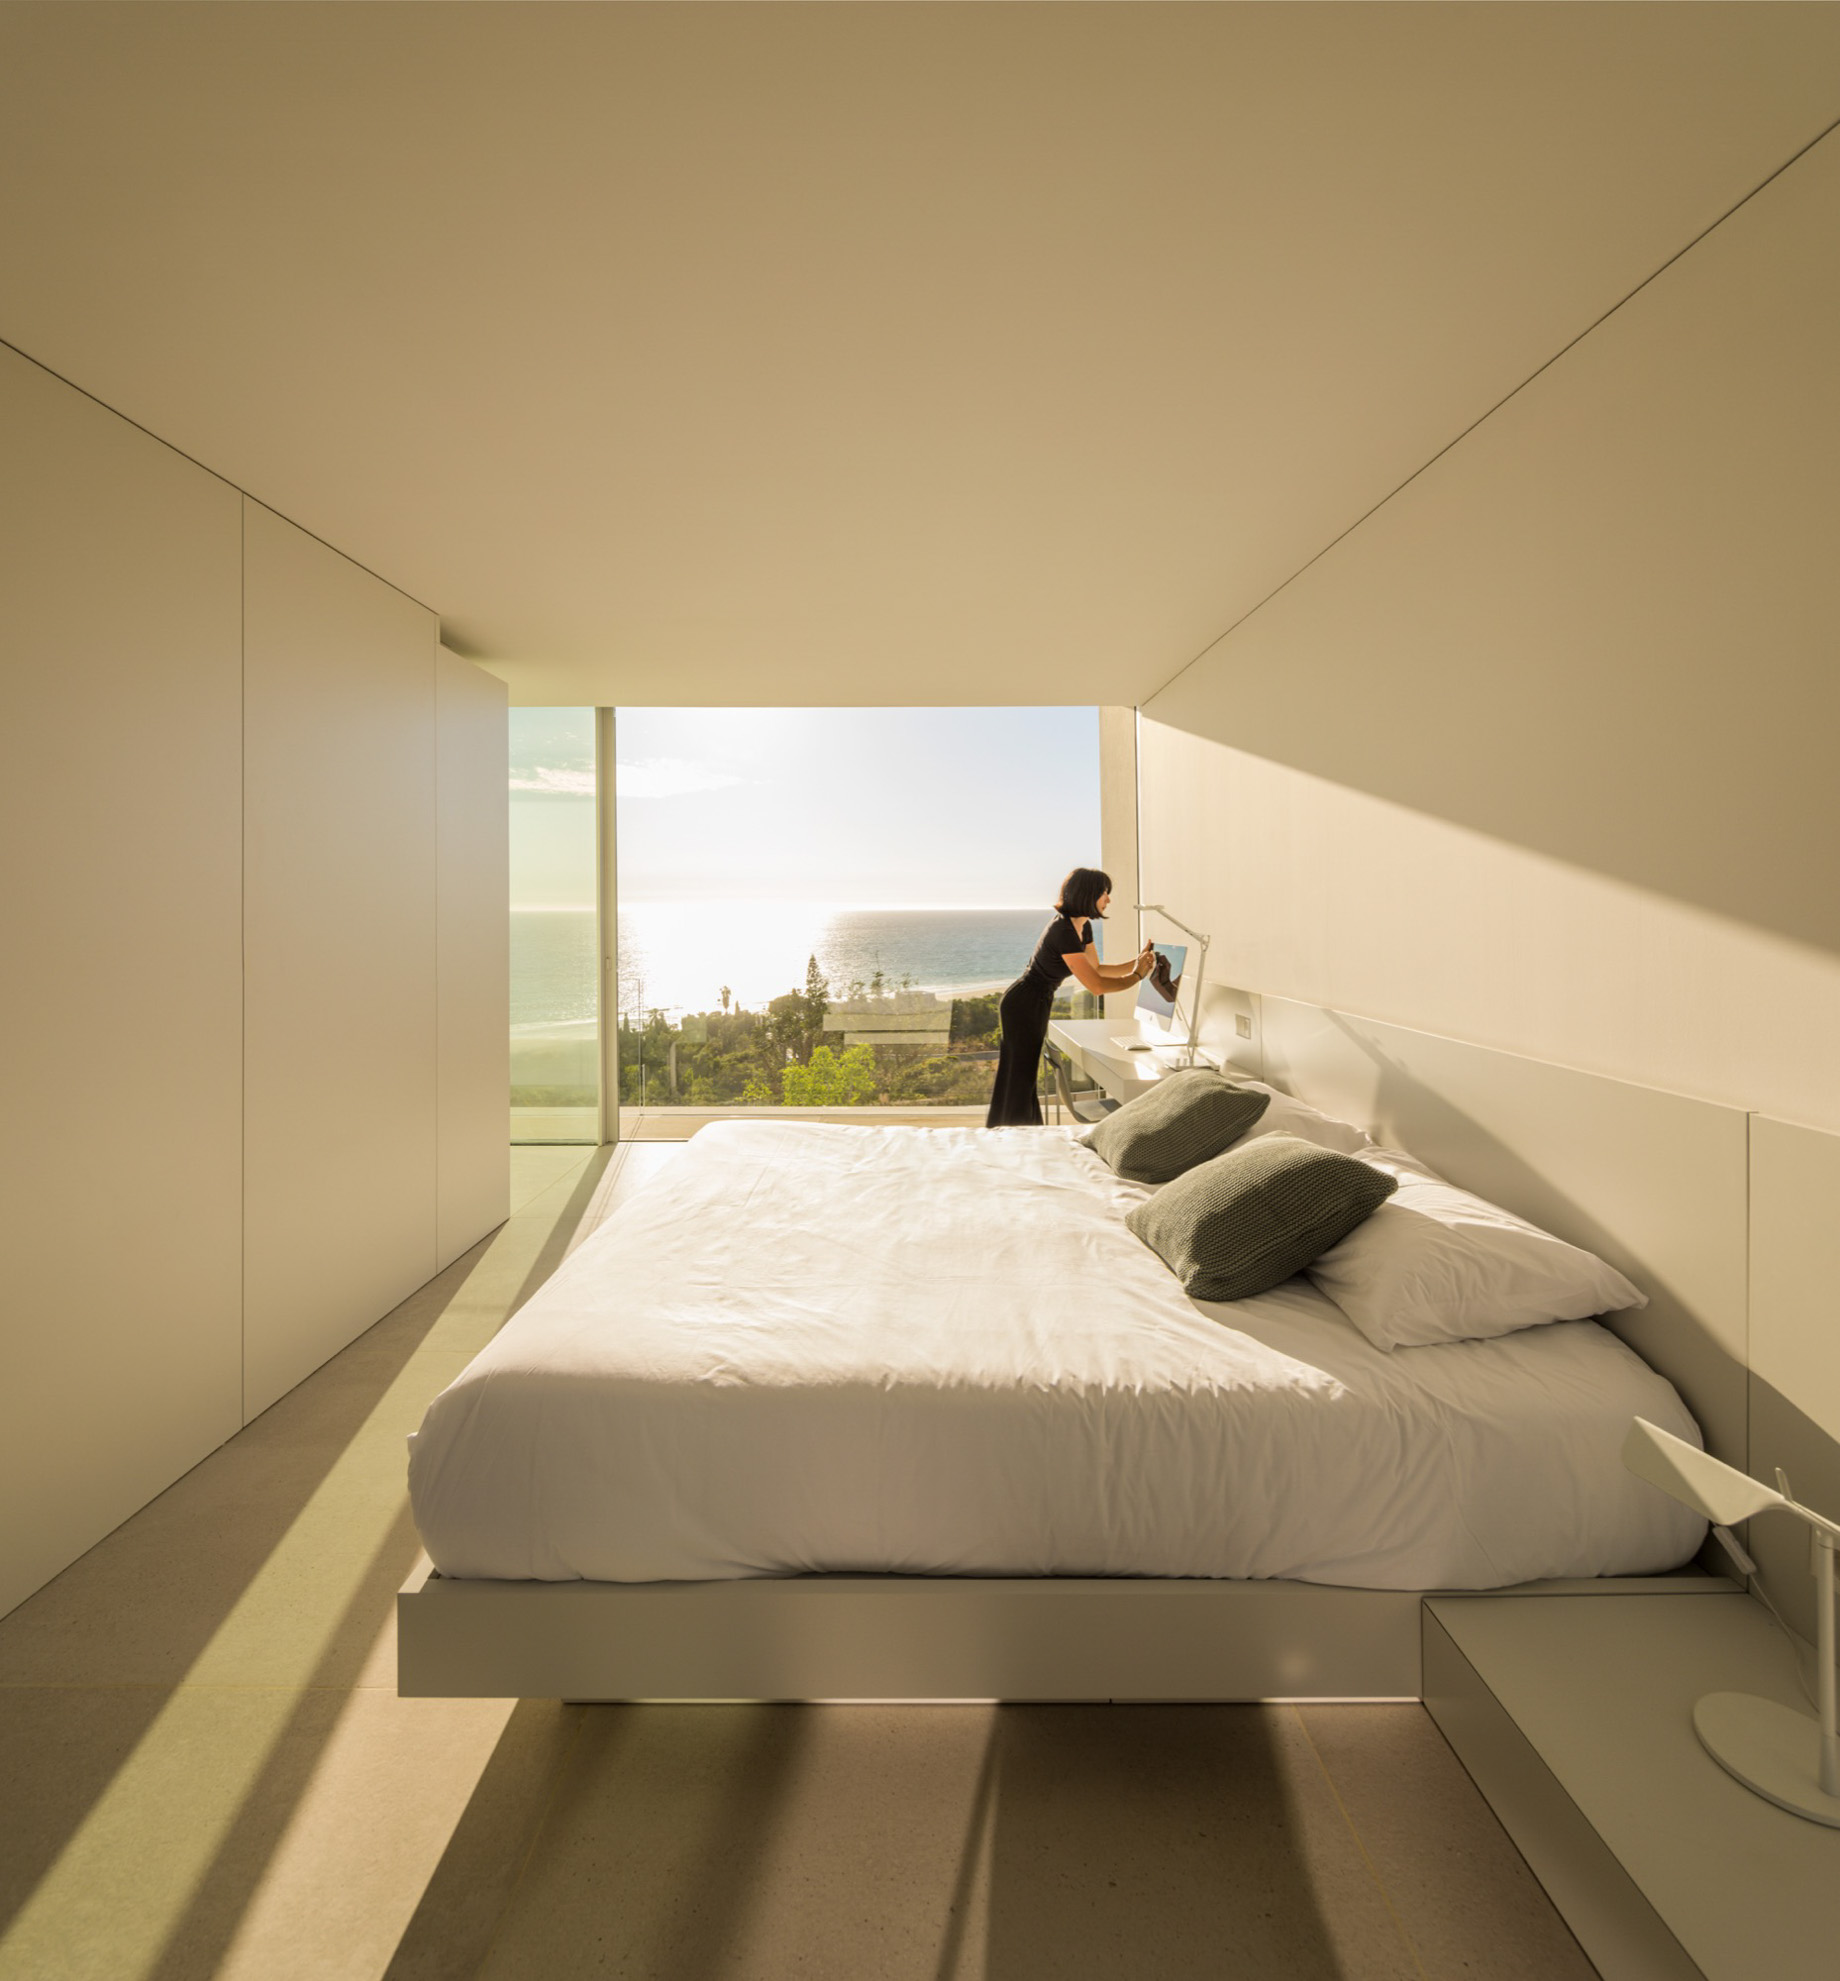 House on the Air Modern Contemporary Villa – Zahara de los Atunes, Spain – 44